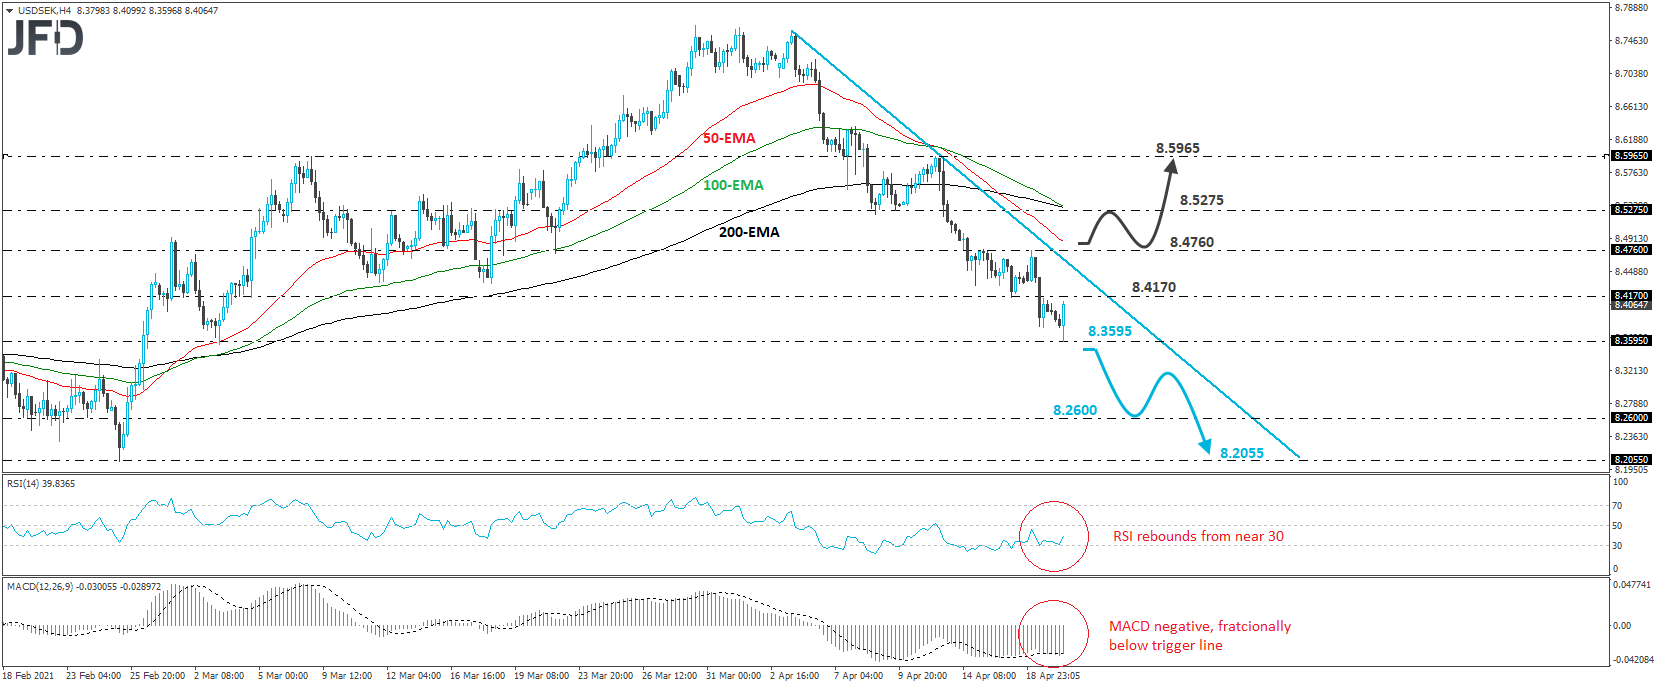 USD/SEK 4-hour chart technical analysis